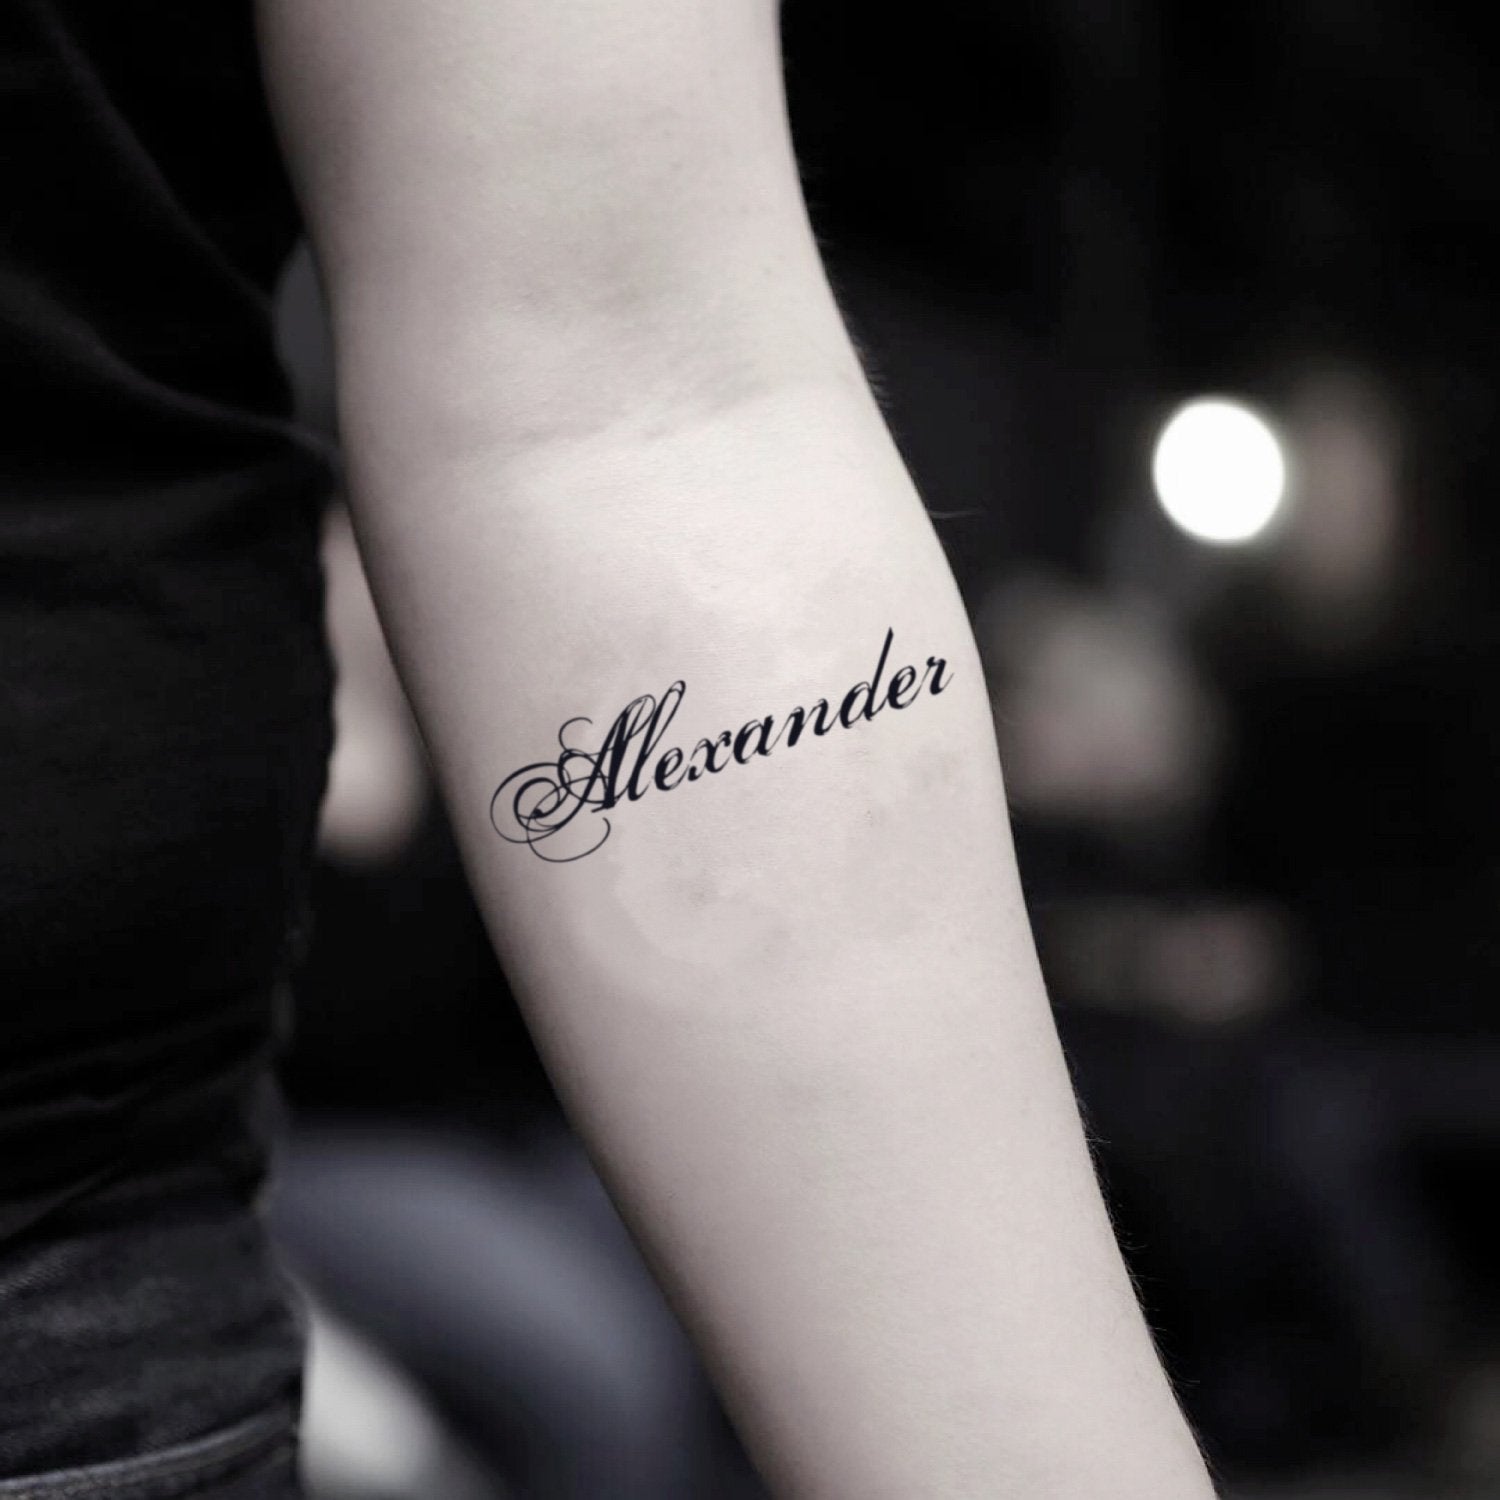 alexander name tattoo designs